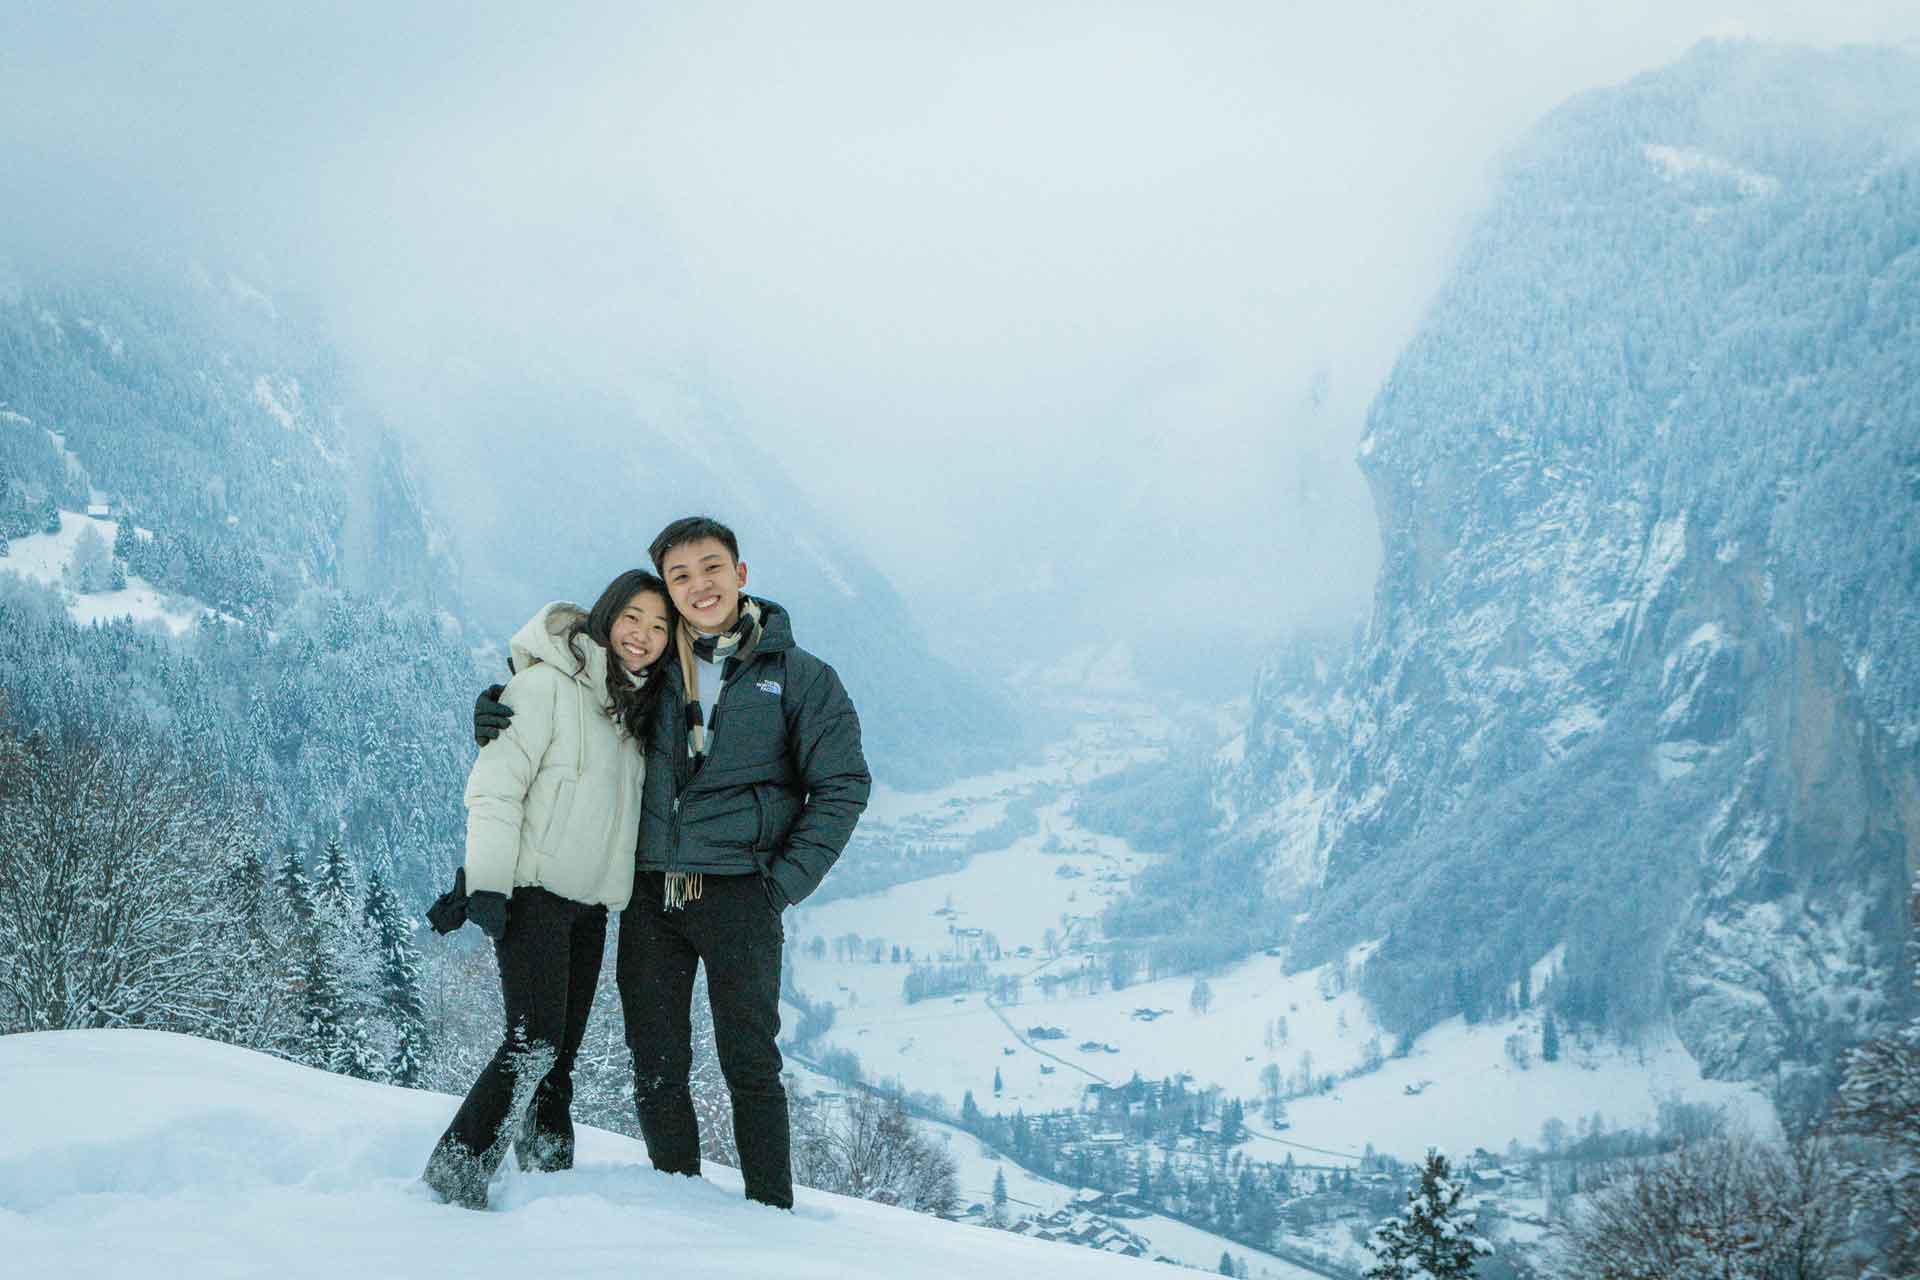 Photographer Lauterbrunnen Surprise Engagement In The Snow